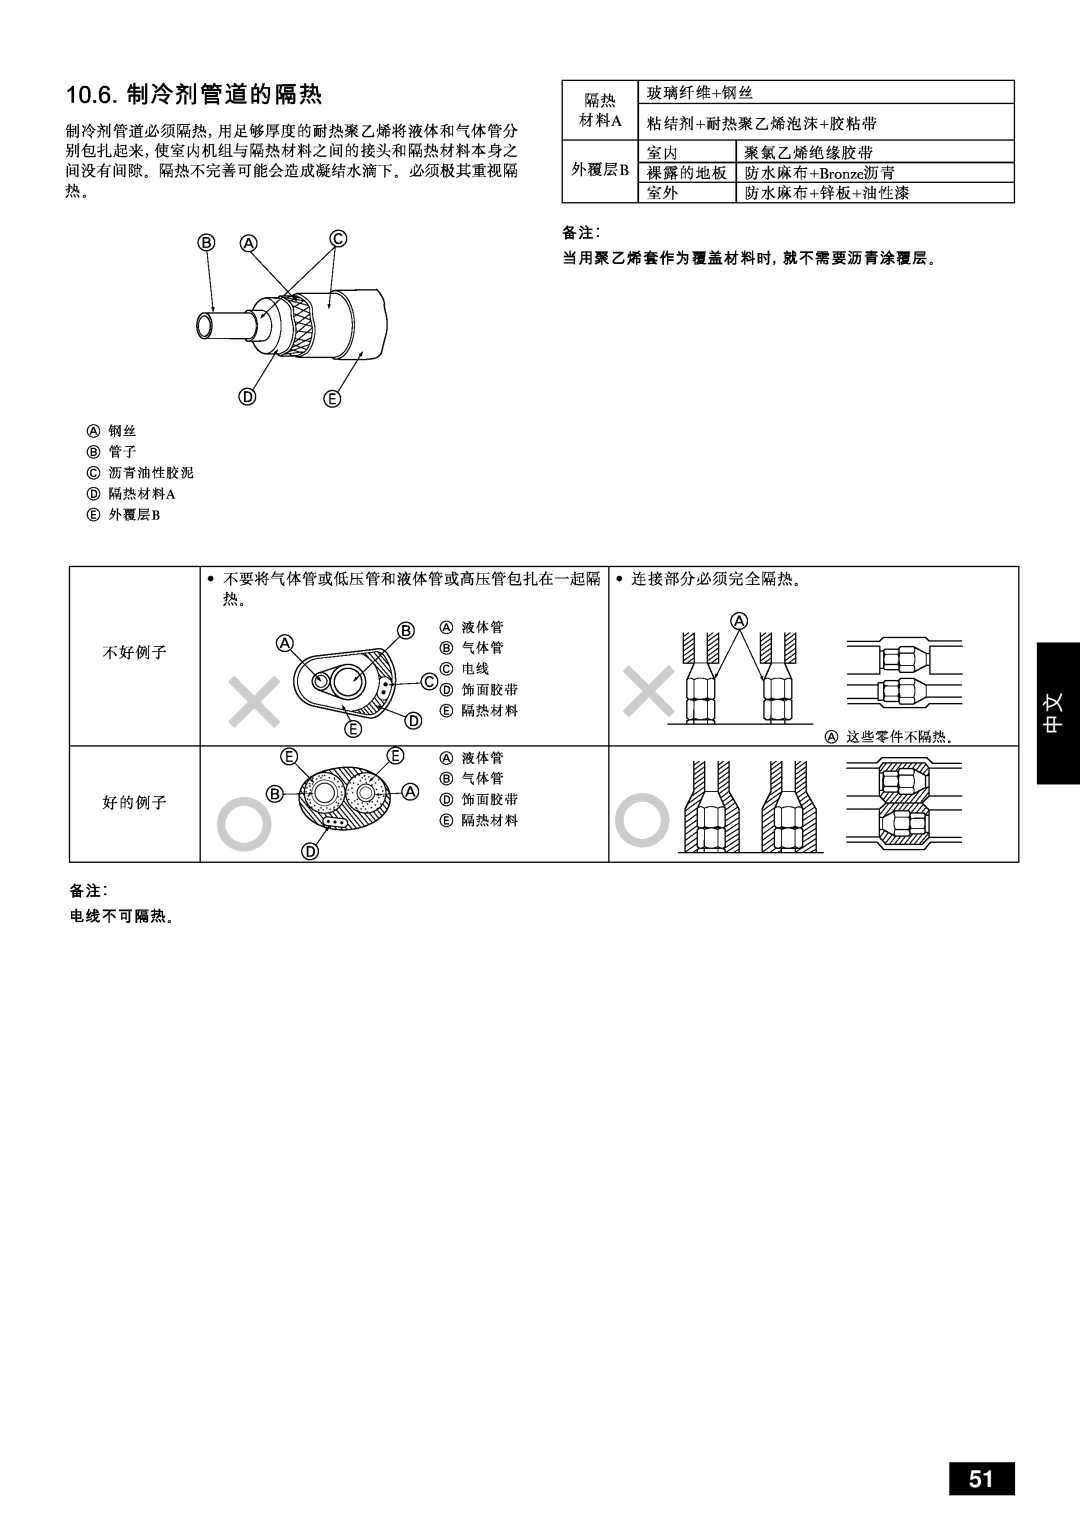 Mitsubishi Electronics PUHY-YMC installation manual Nmksk=, #$%& *+,-.&/01234564!7 !# $%&*+,-./0123*+,-45, #$%&*+ ,-./012&3 